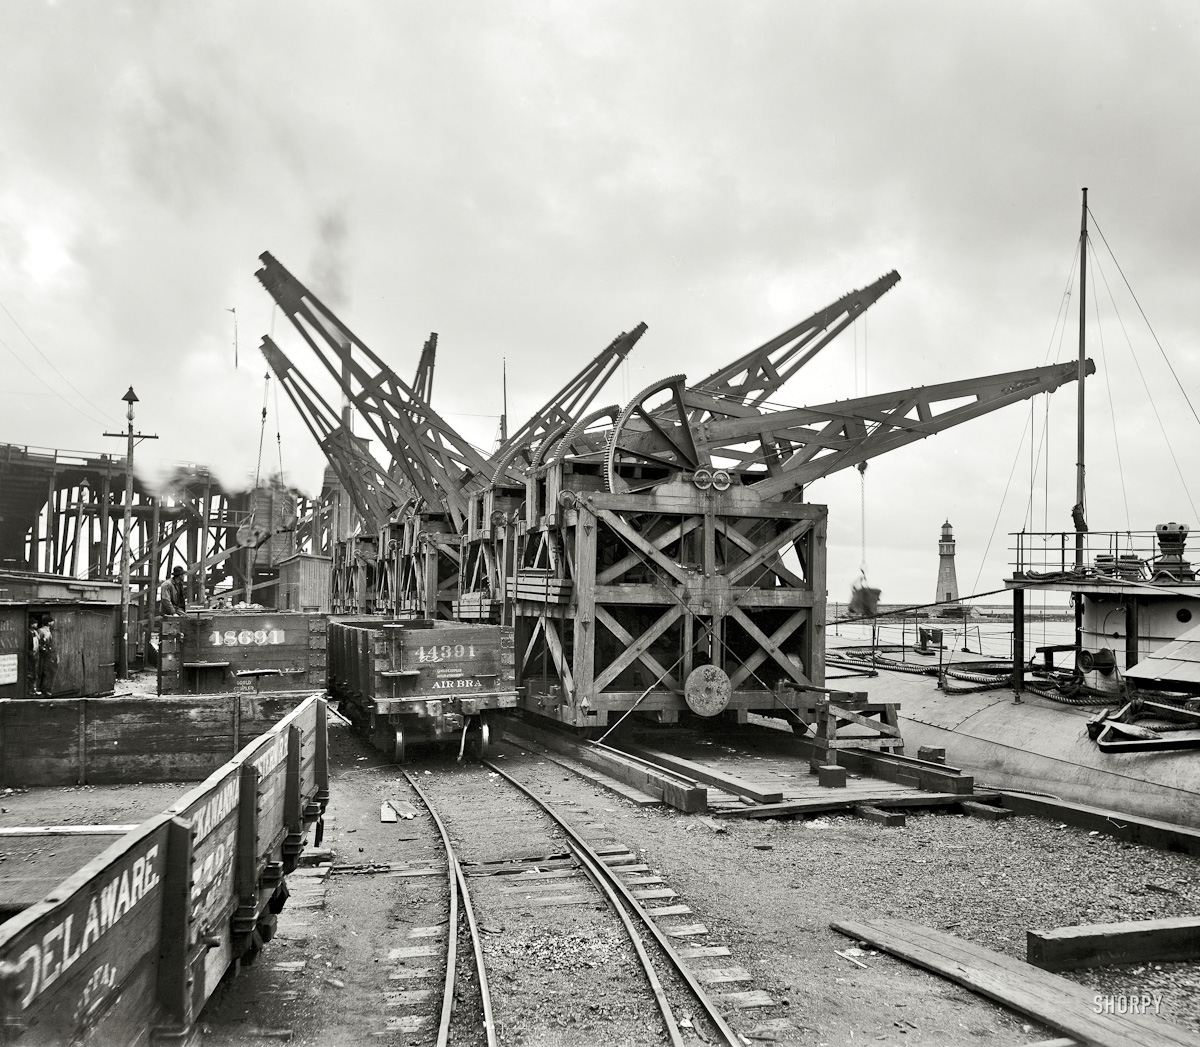 024  1901  Buffalo , New York . "Unloading ore from whaleback carrier"